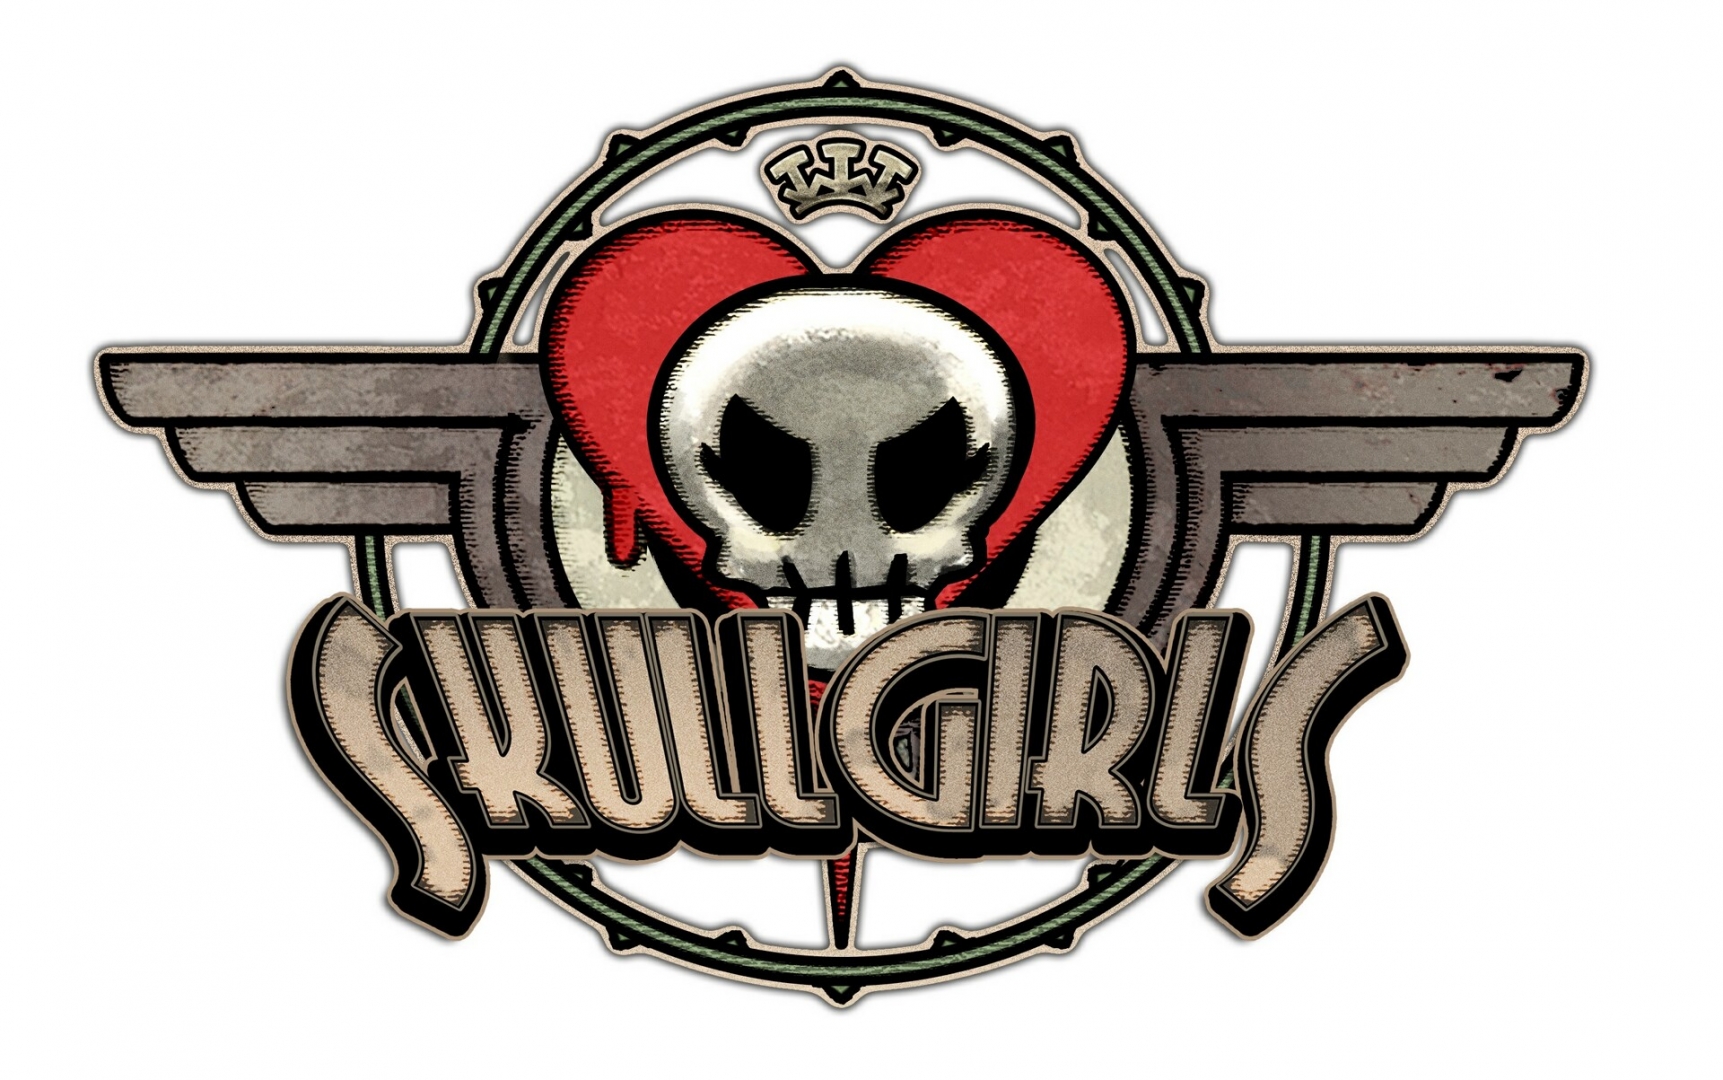 Skullgirls review (XBLA)